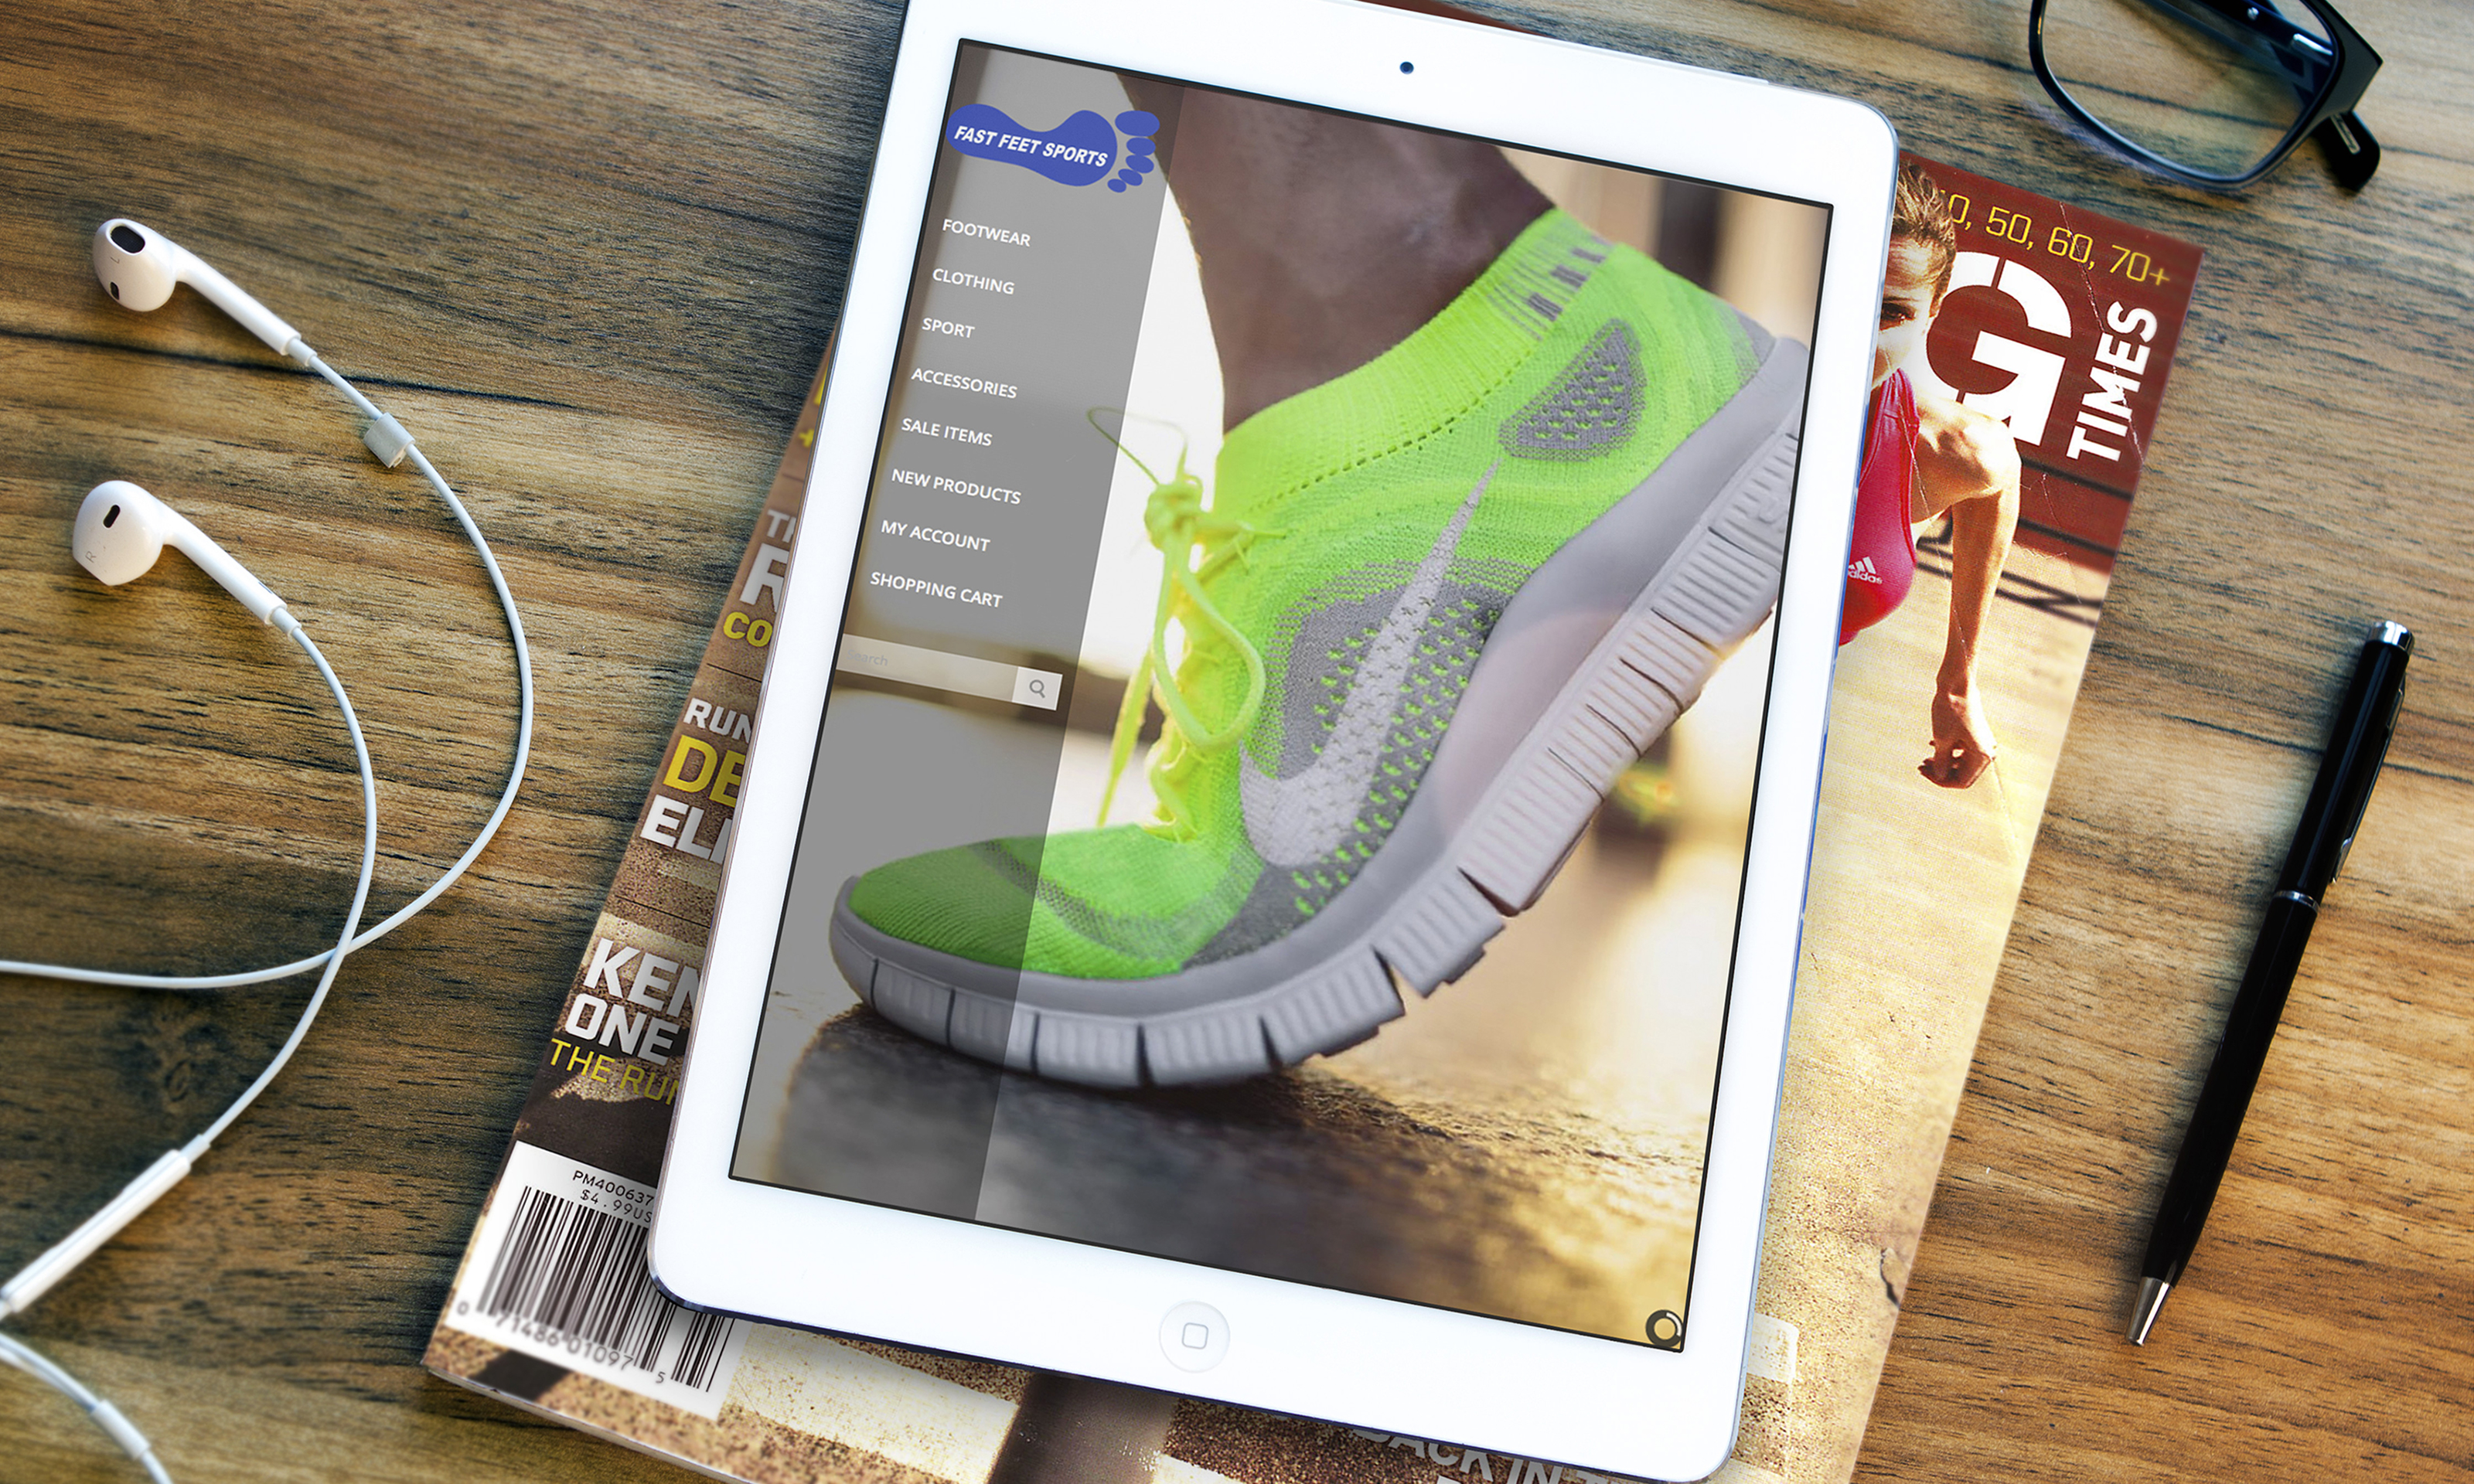 fast feet website - shown on an iPad